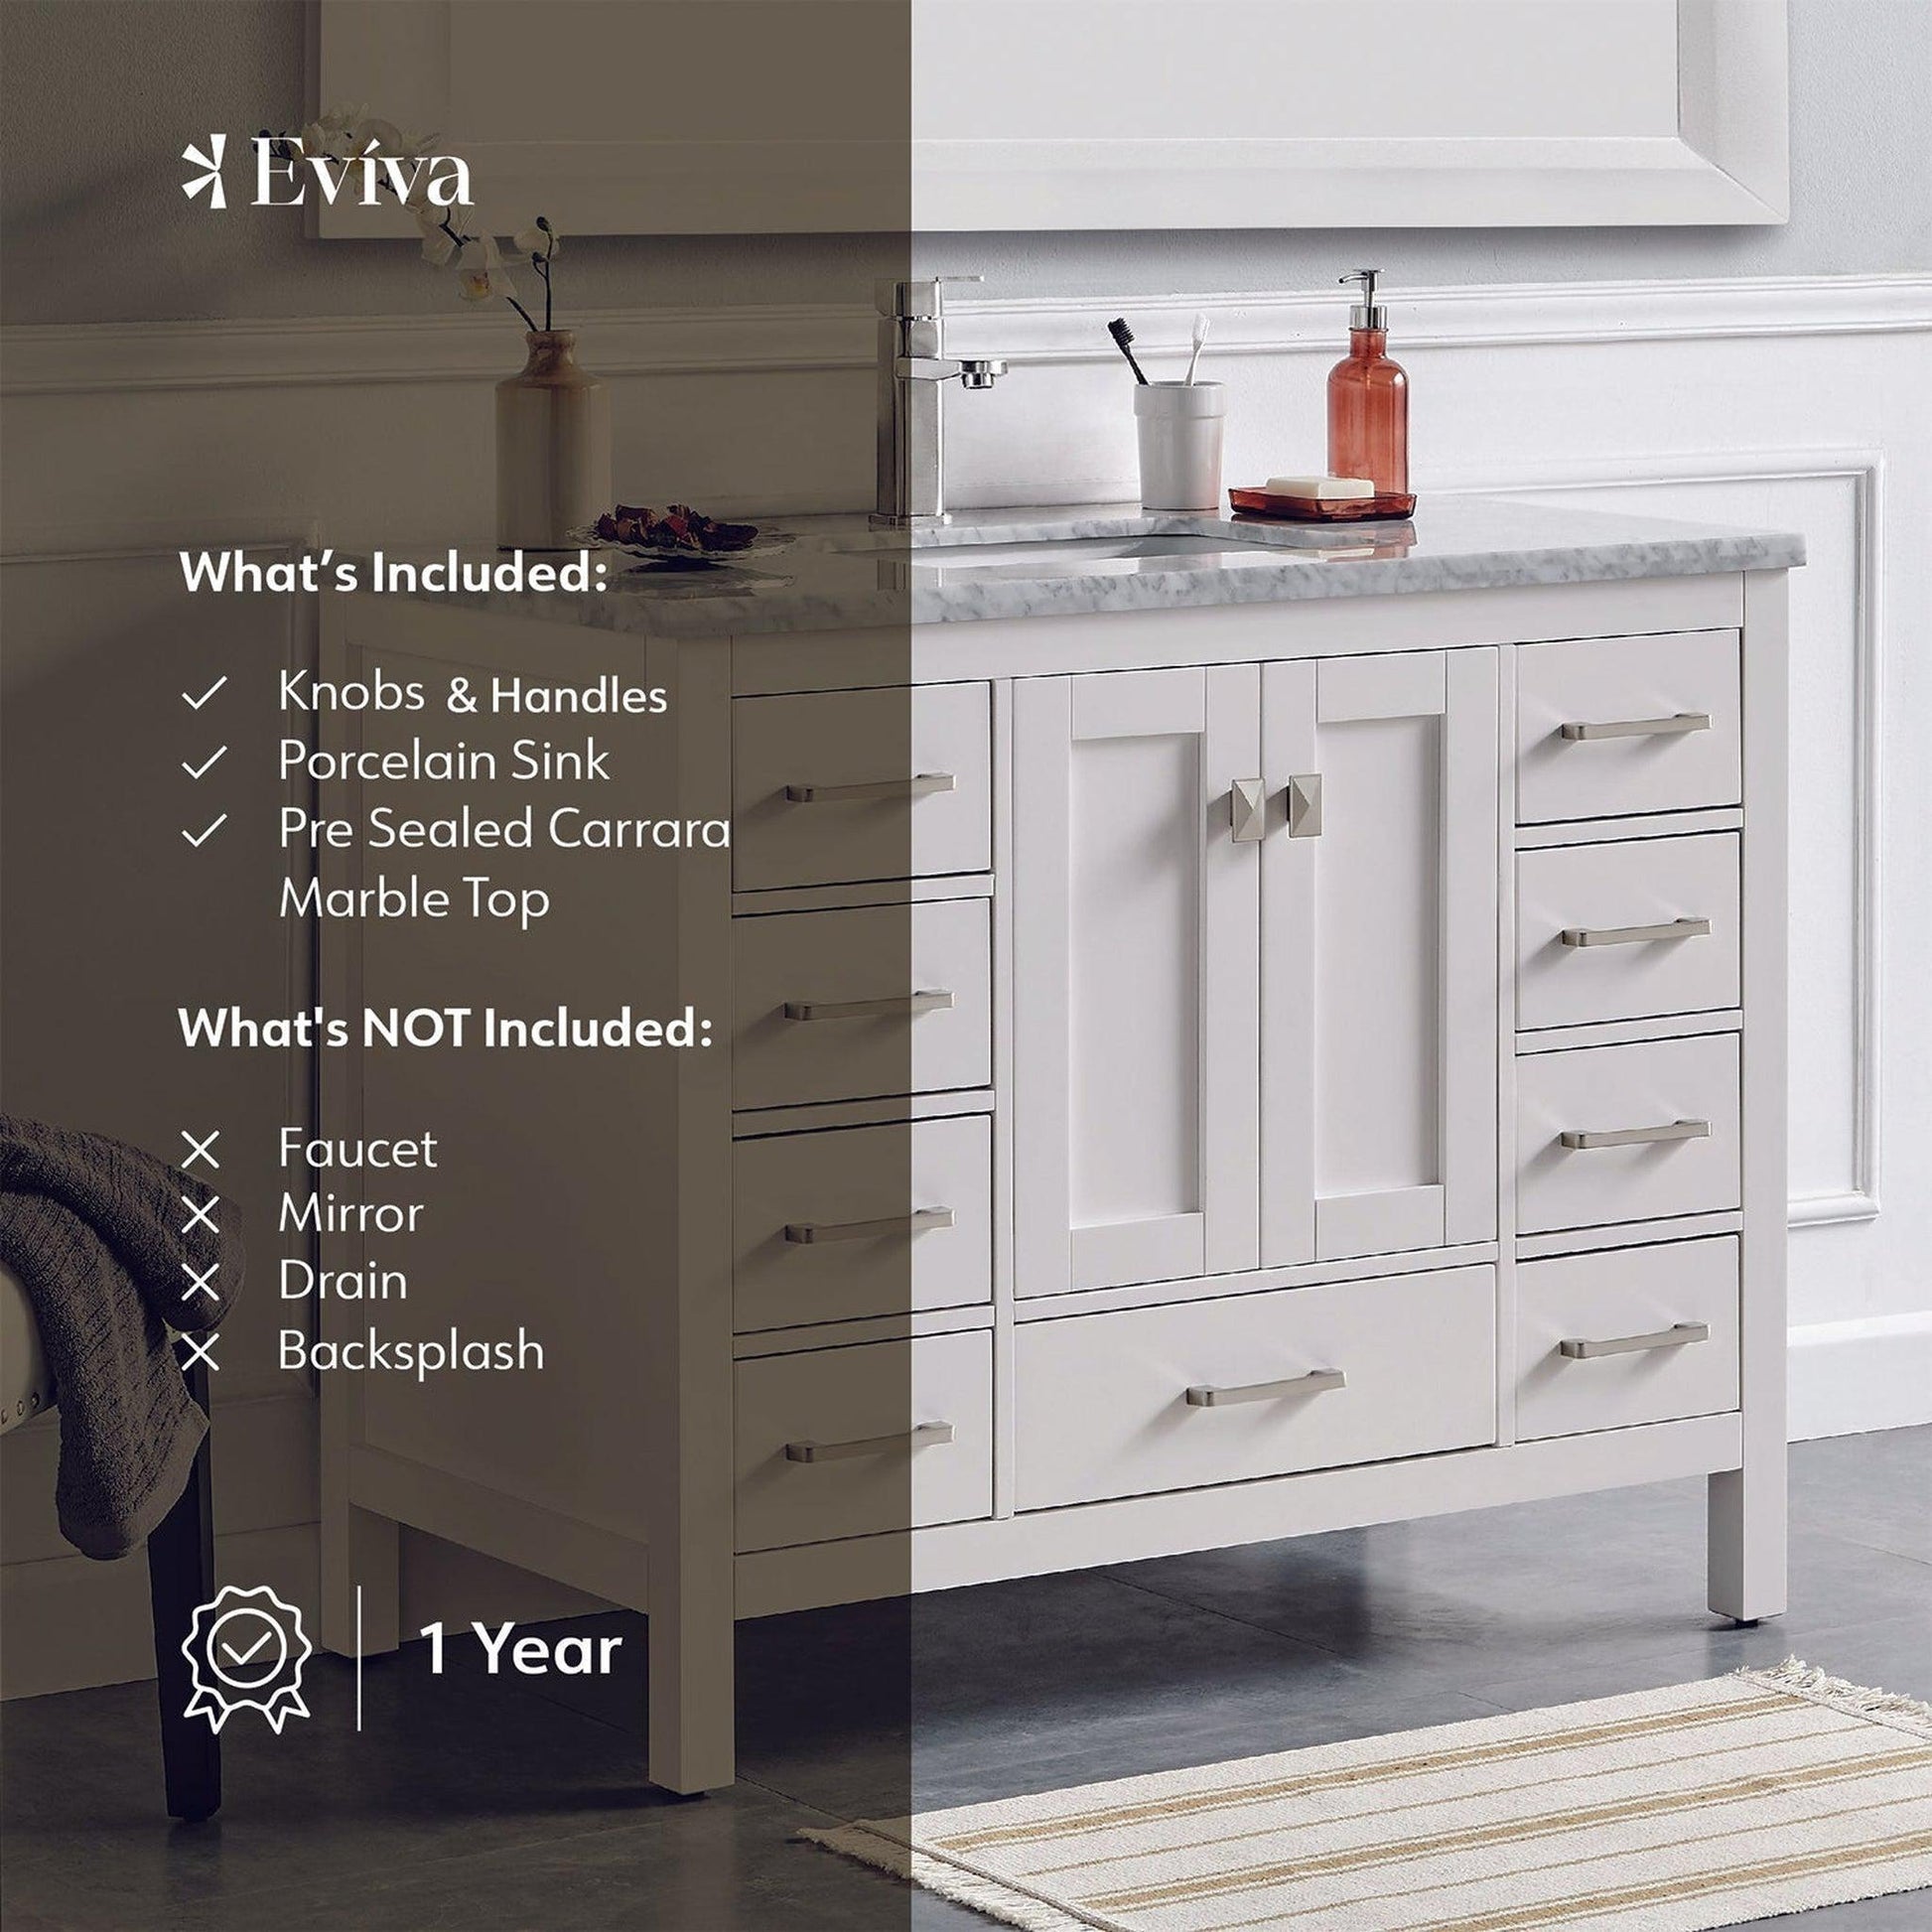 Eviva Hampton 36" x 34" in 18" Depth White Freestanding Bathroom Vanity With Marble Carrara Countertop and Single Undermount Sink